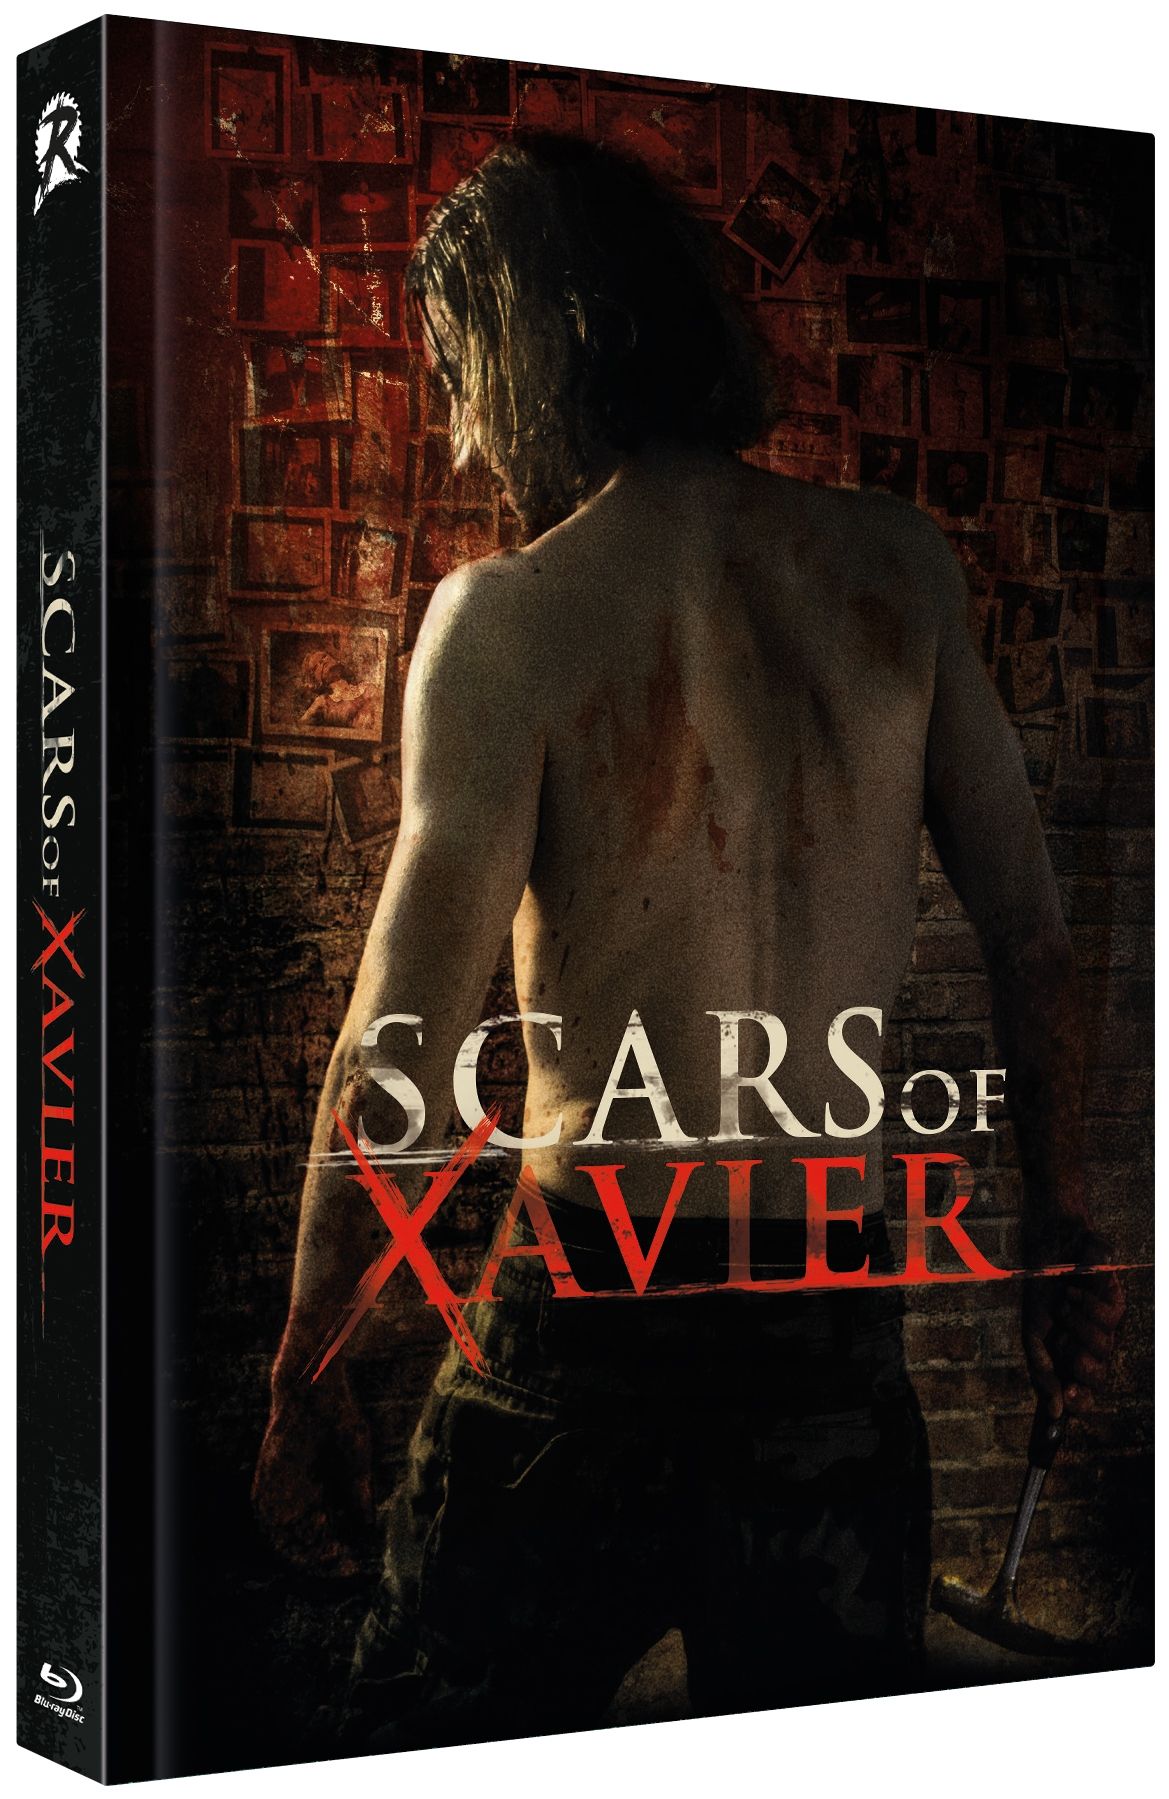 Scars of Xavier (Lim. Uncut Mediabook - Cover A) (DVD + BLURAY)